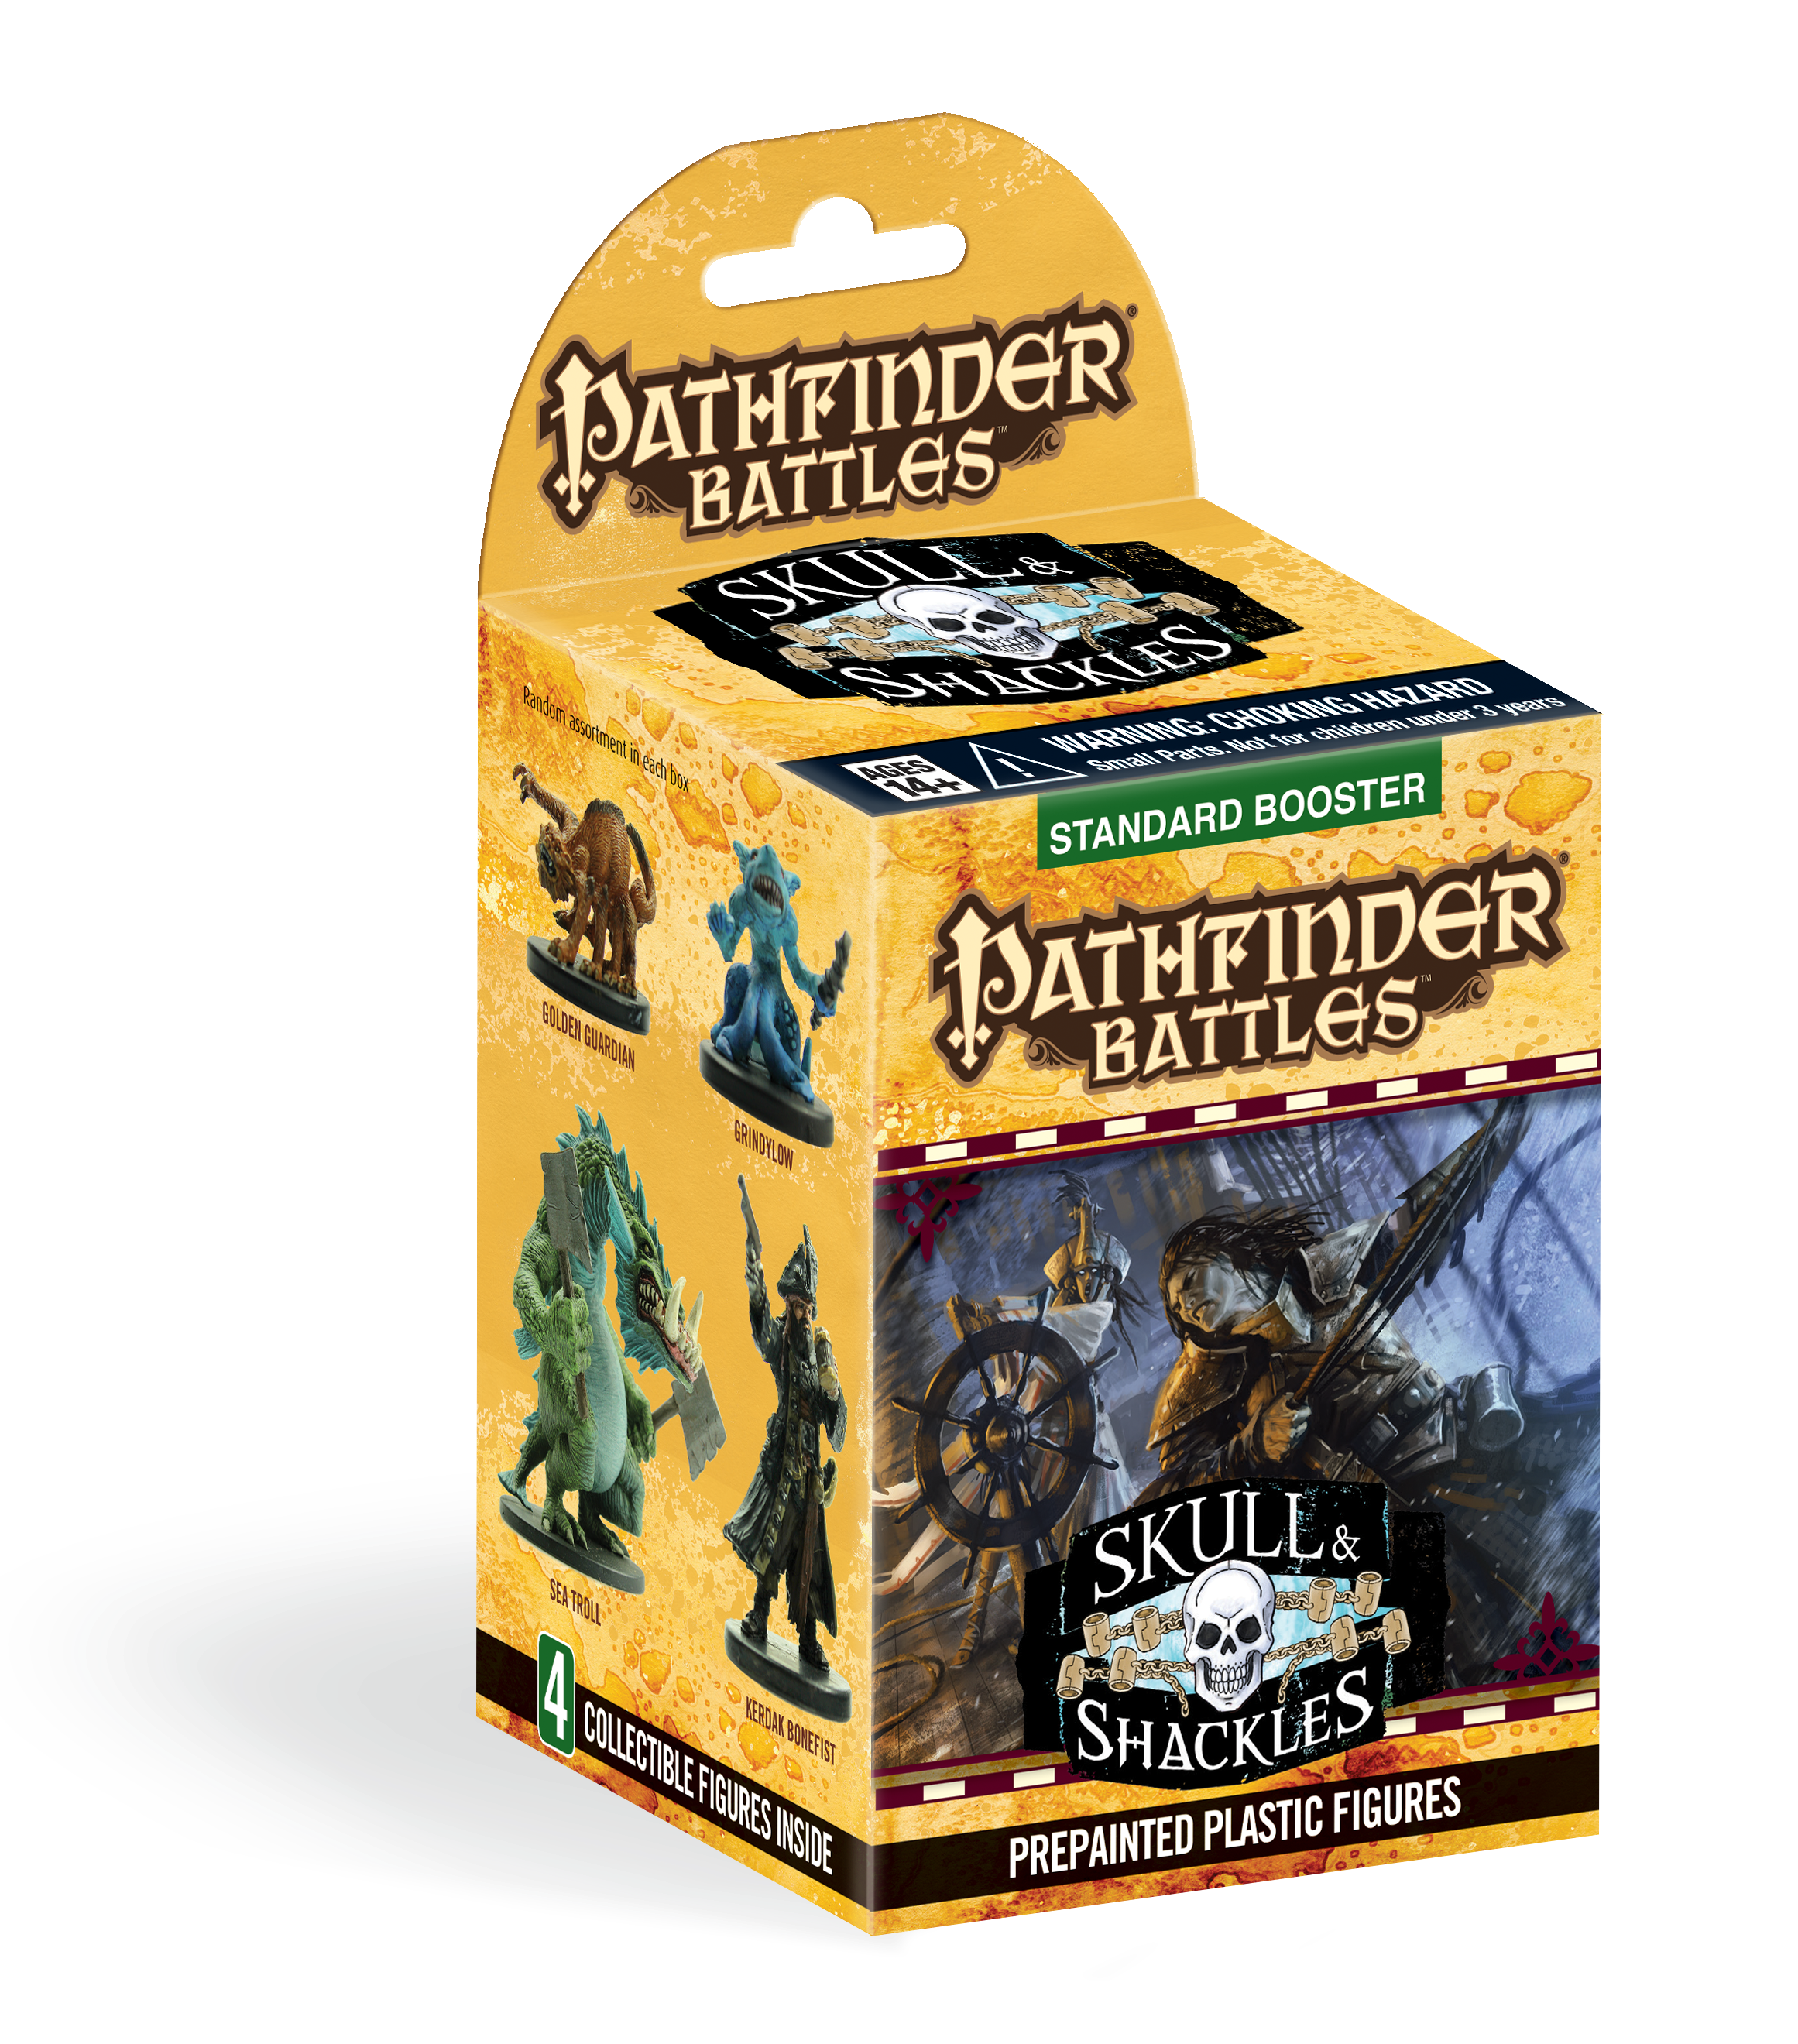 Box mock up for Pathfinder Battles: Skull and Shackles miniatures